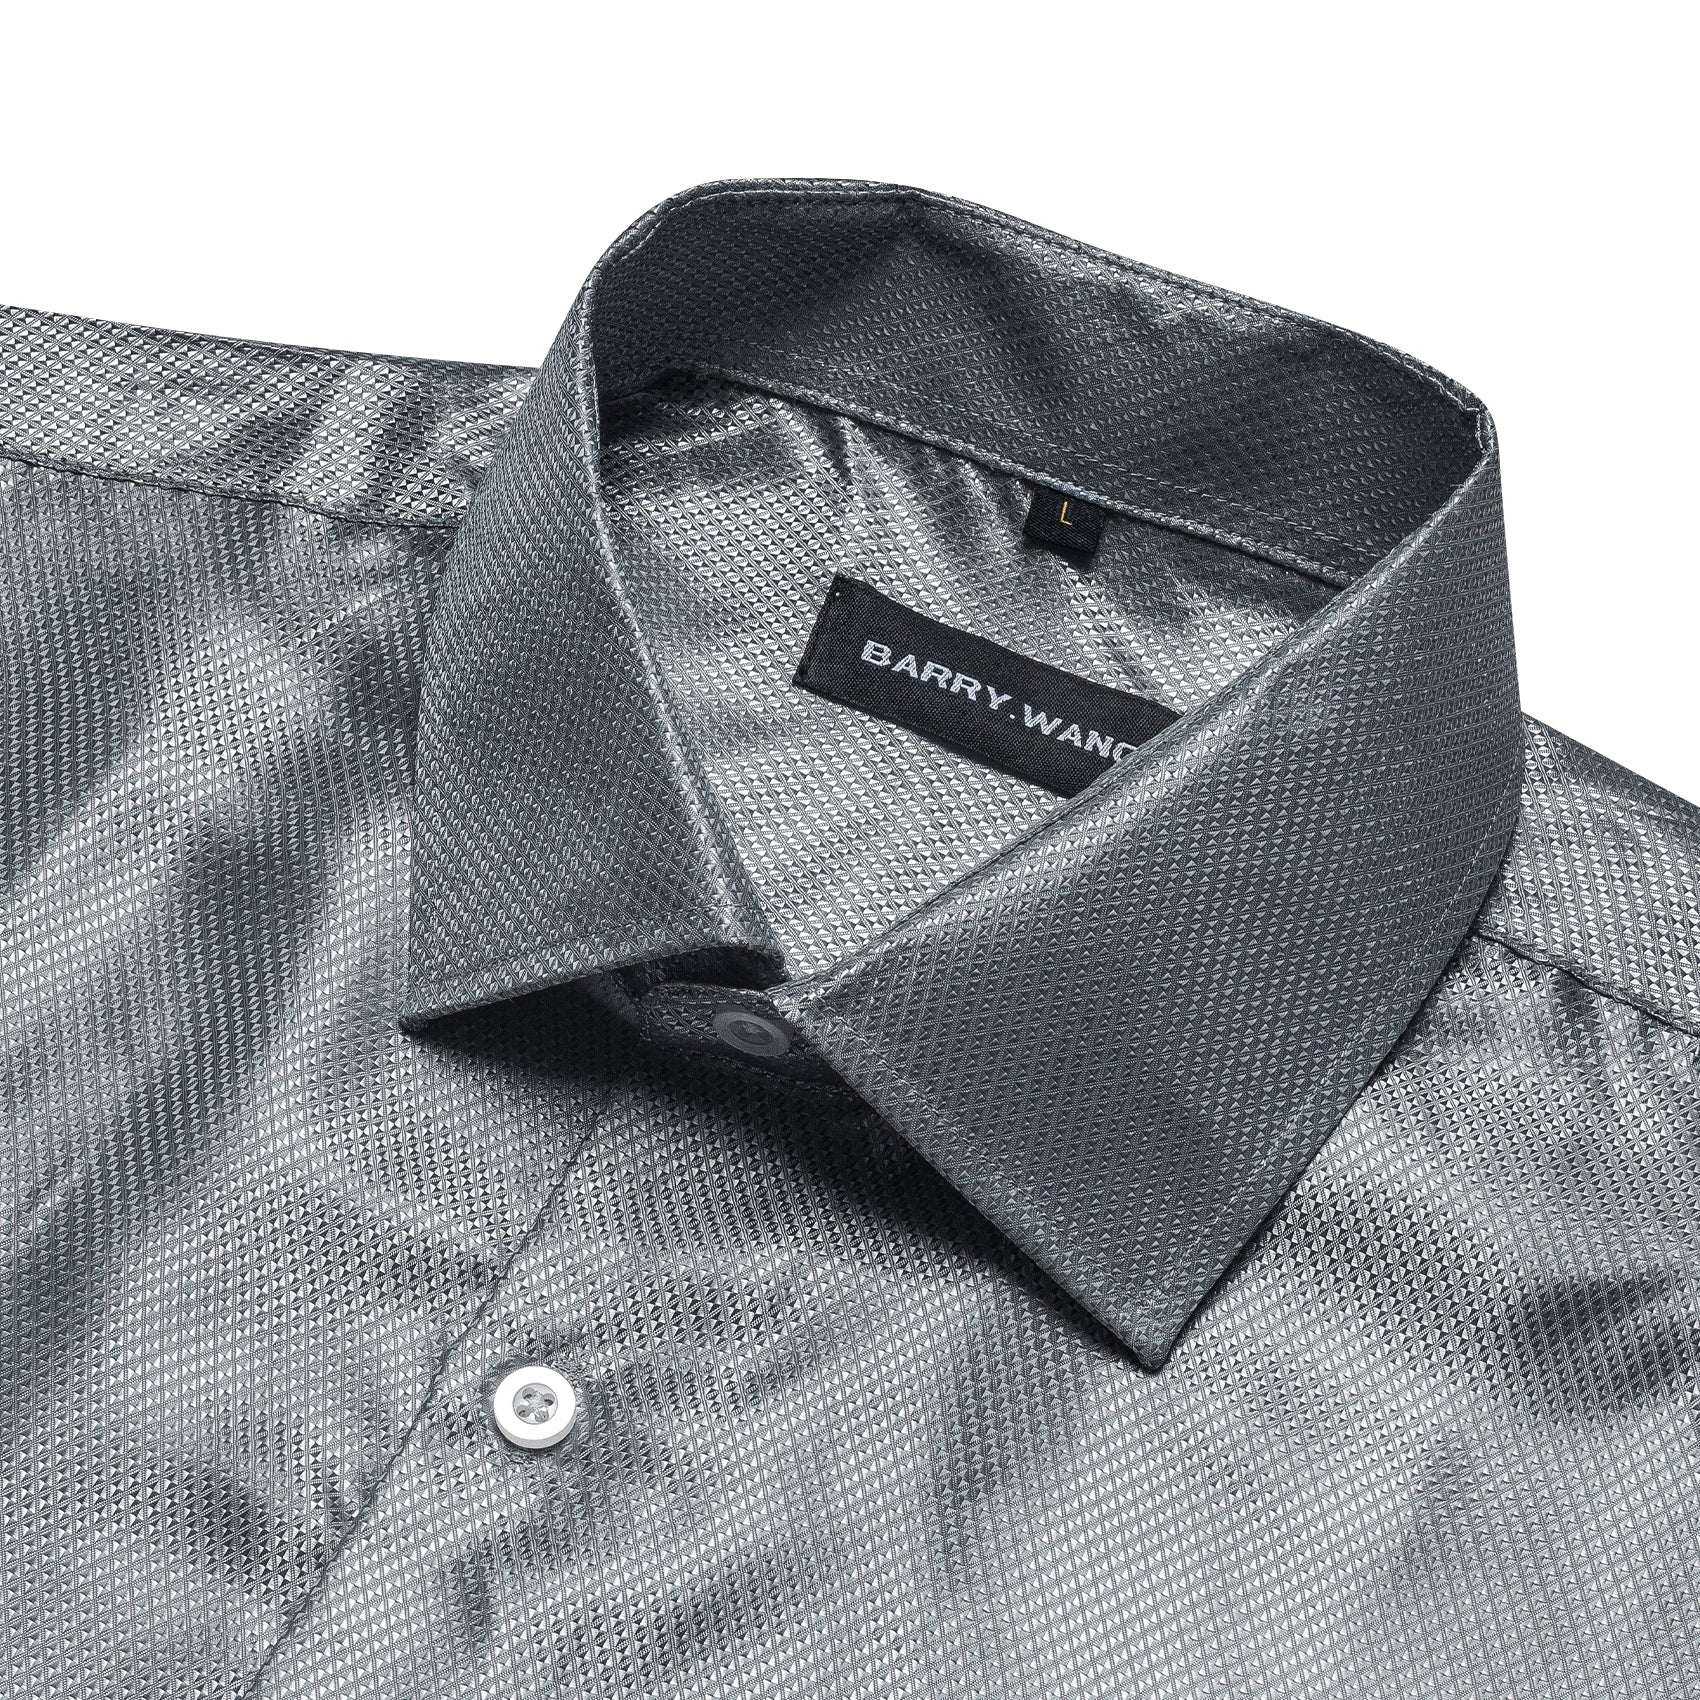 Barry.wang Classic Grey Solid Silk Shirt